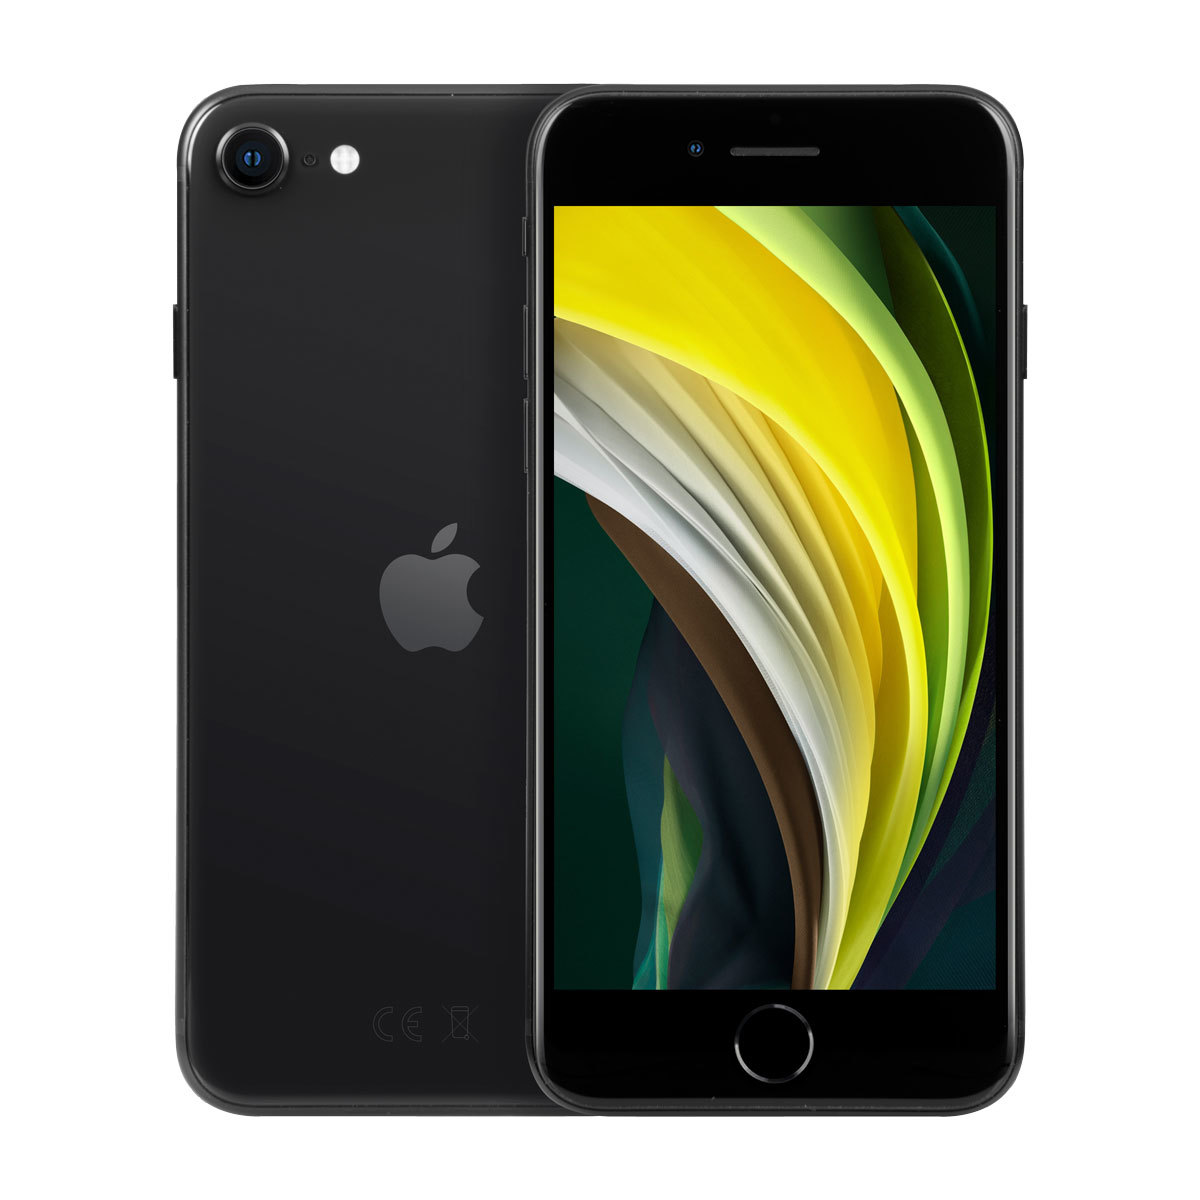 Apple iPhone SE 64GB Sim Free Mobile in Black, MHGP3B/A | Costco UK